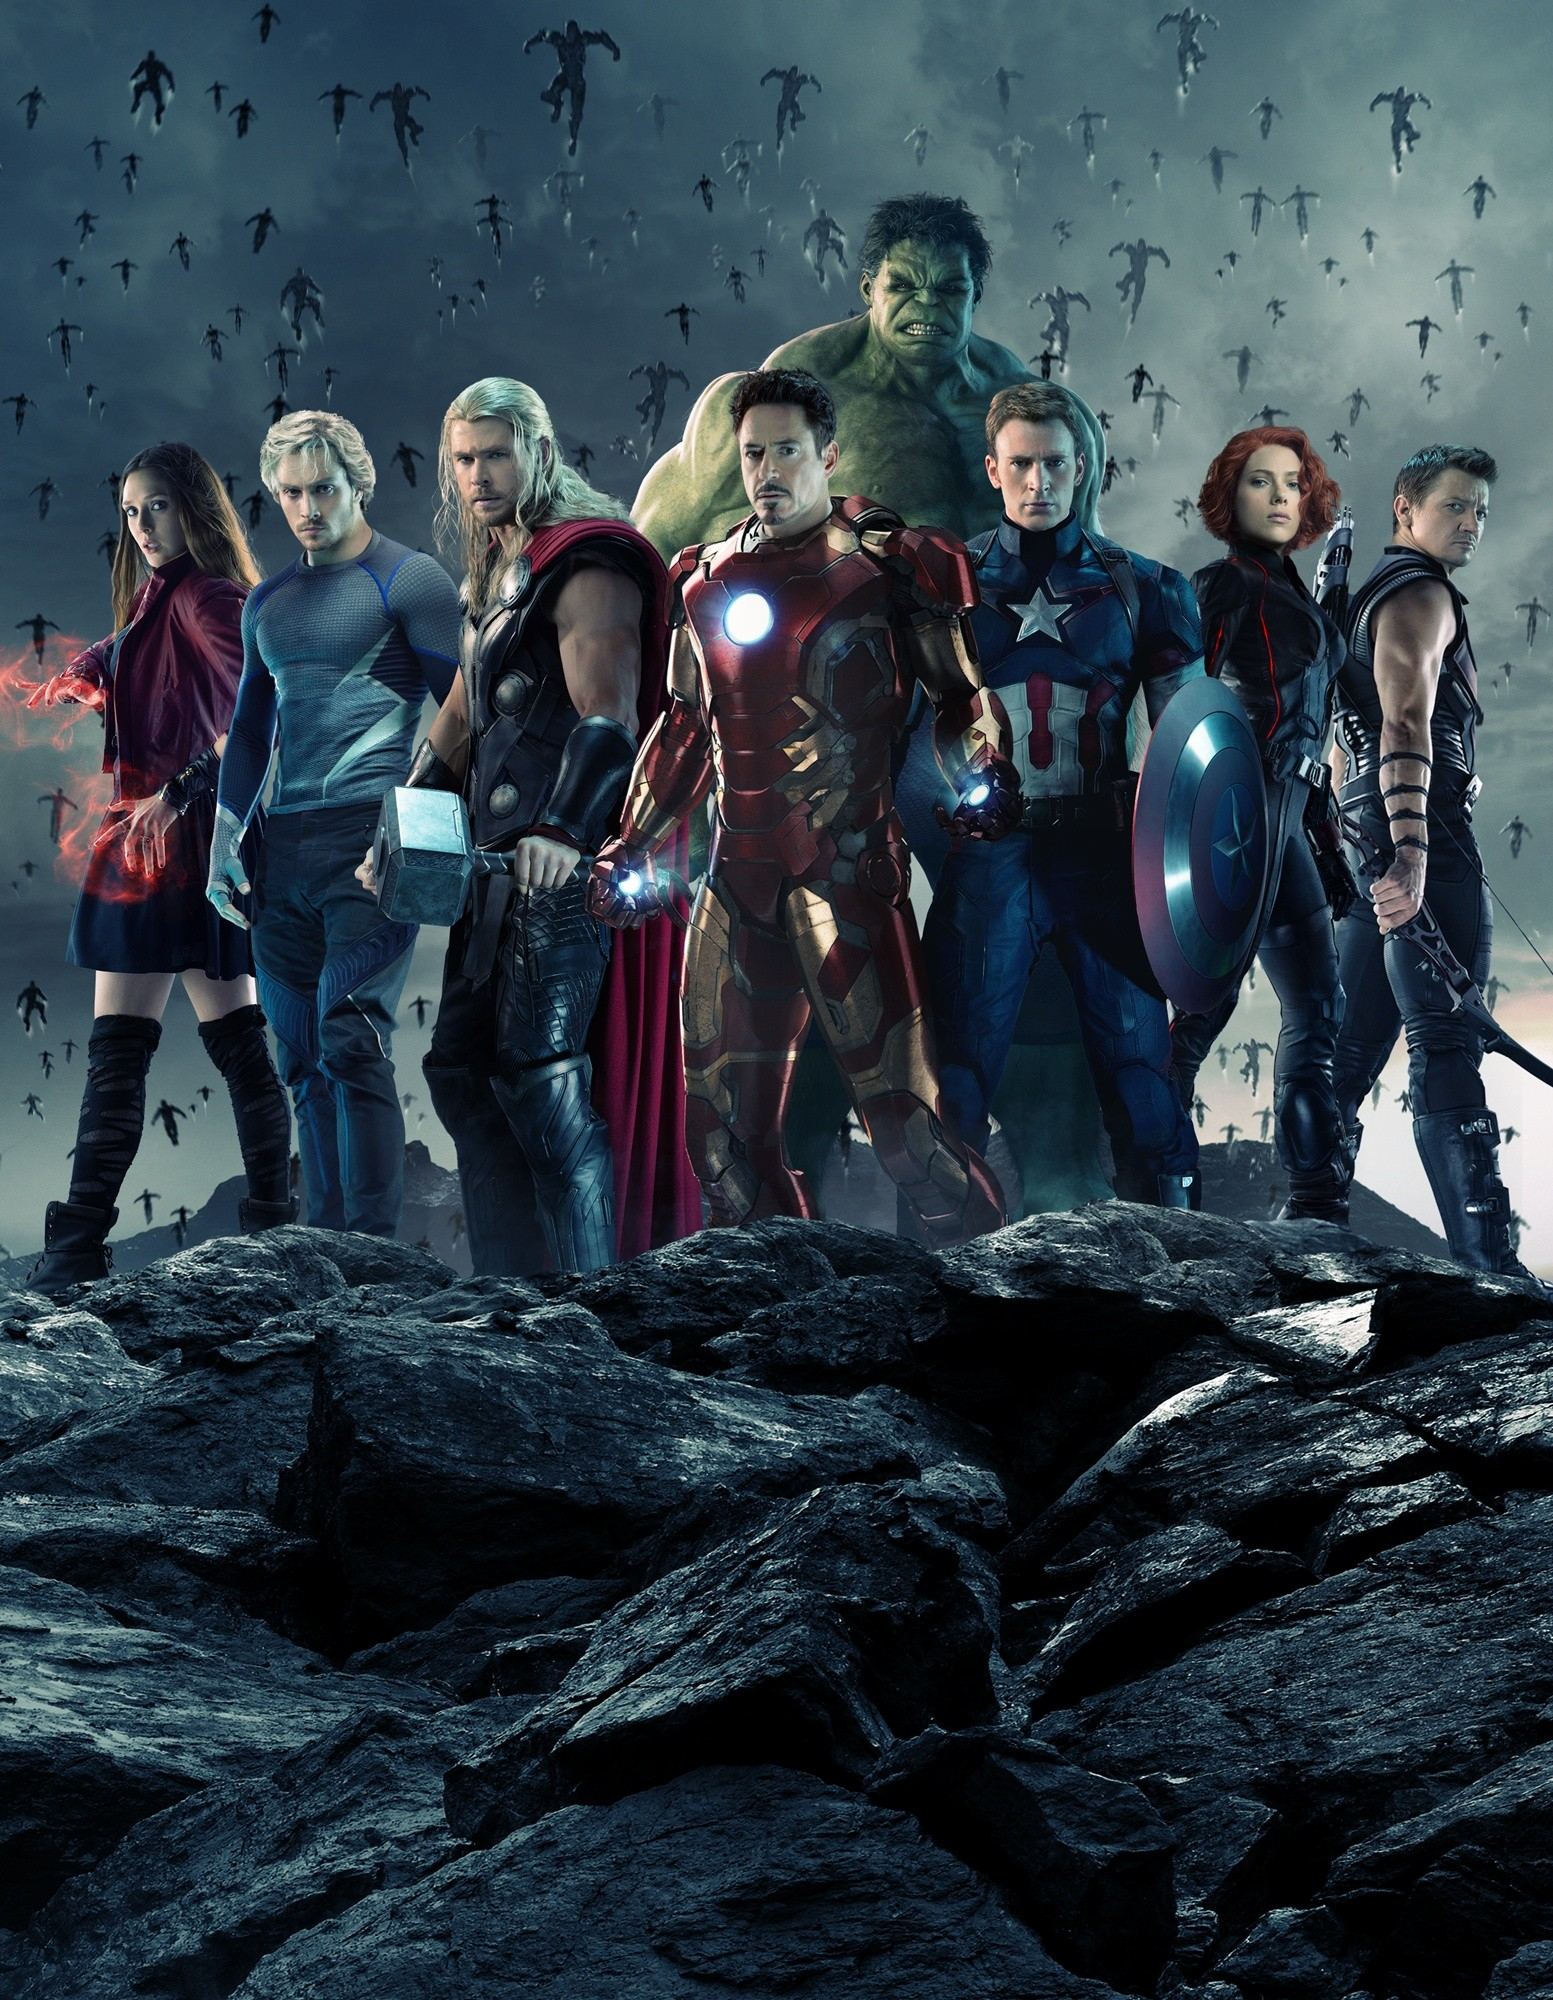 Elizabeth Olsen, Aaron Johnson, Chris Hemsworth, Robert Downey Jr., Chris Evans, Scarlett Johansson and Jeremy Renner in Walt Disney Pictures' Avengers: Age of Ultron (2015)